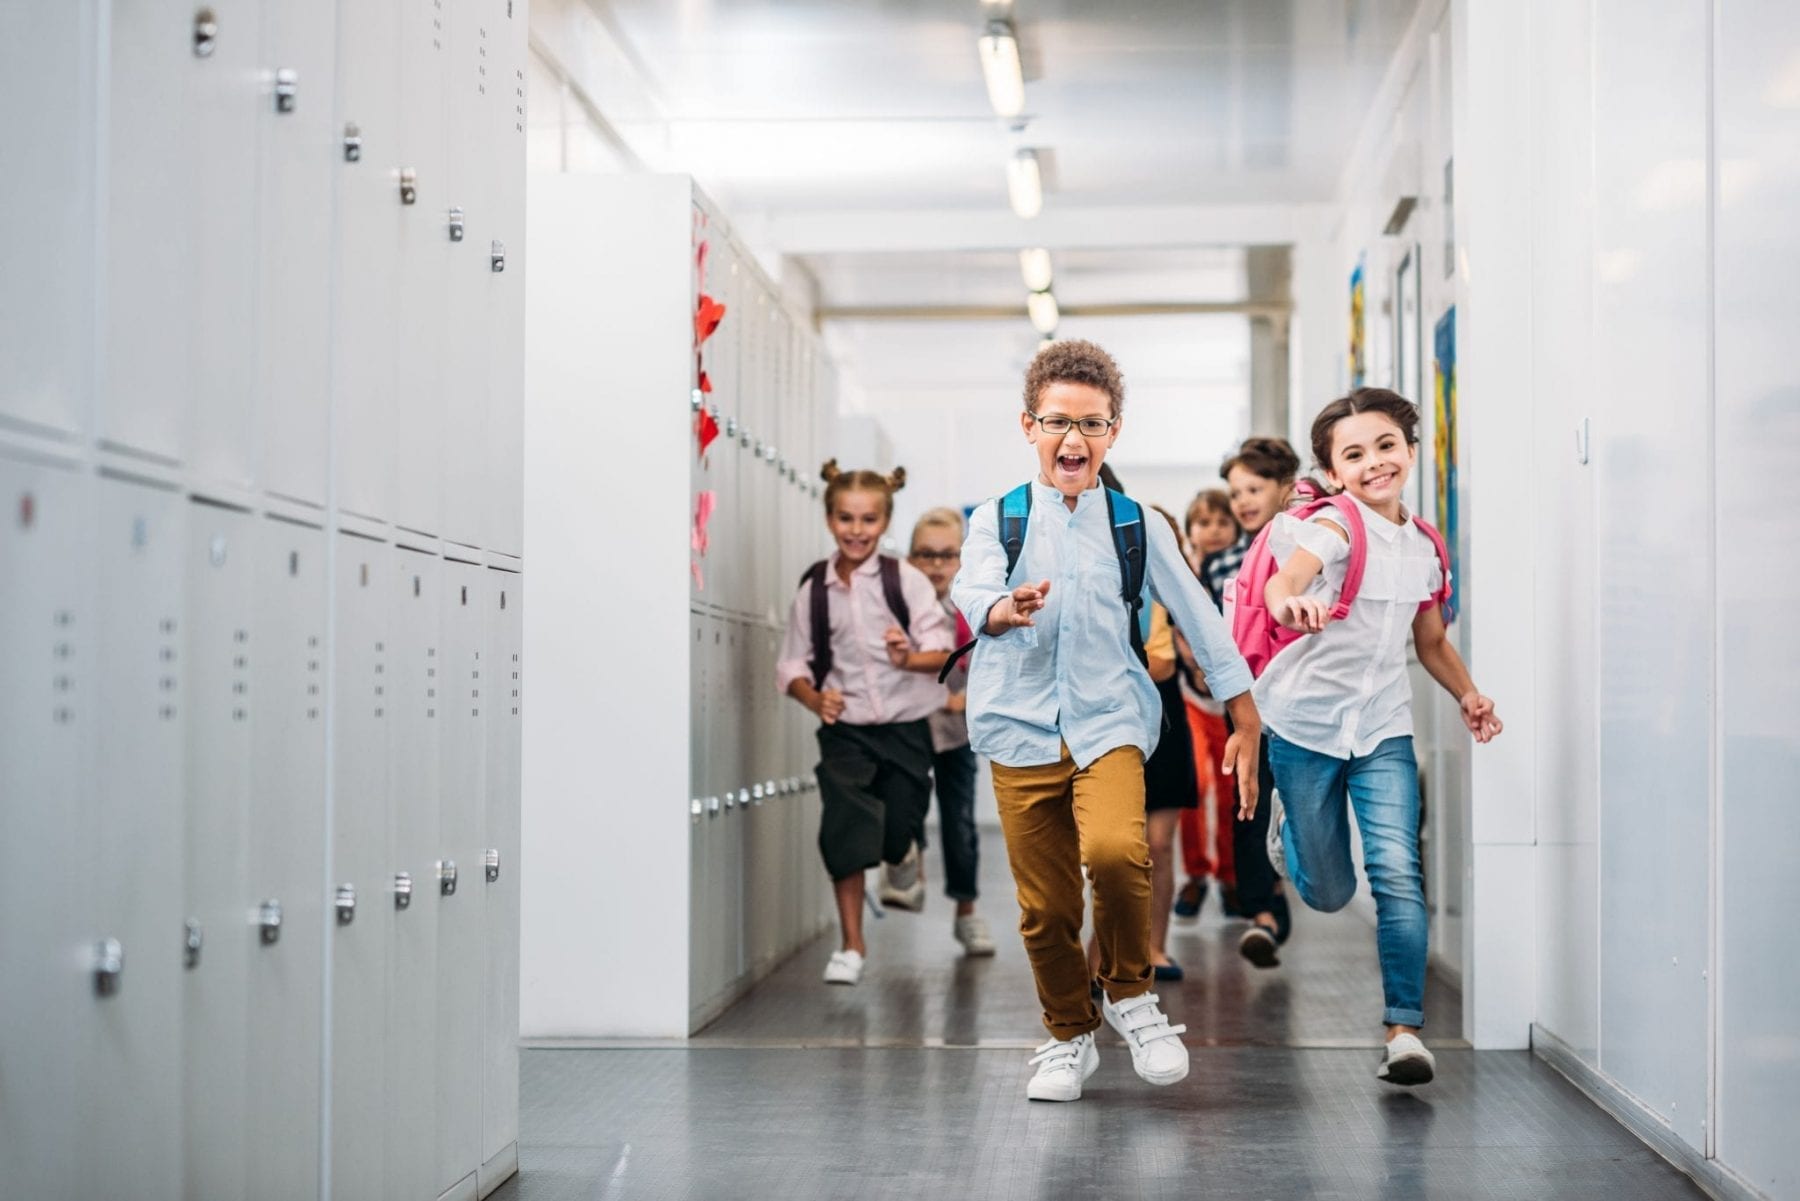 Students running through school corridor